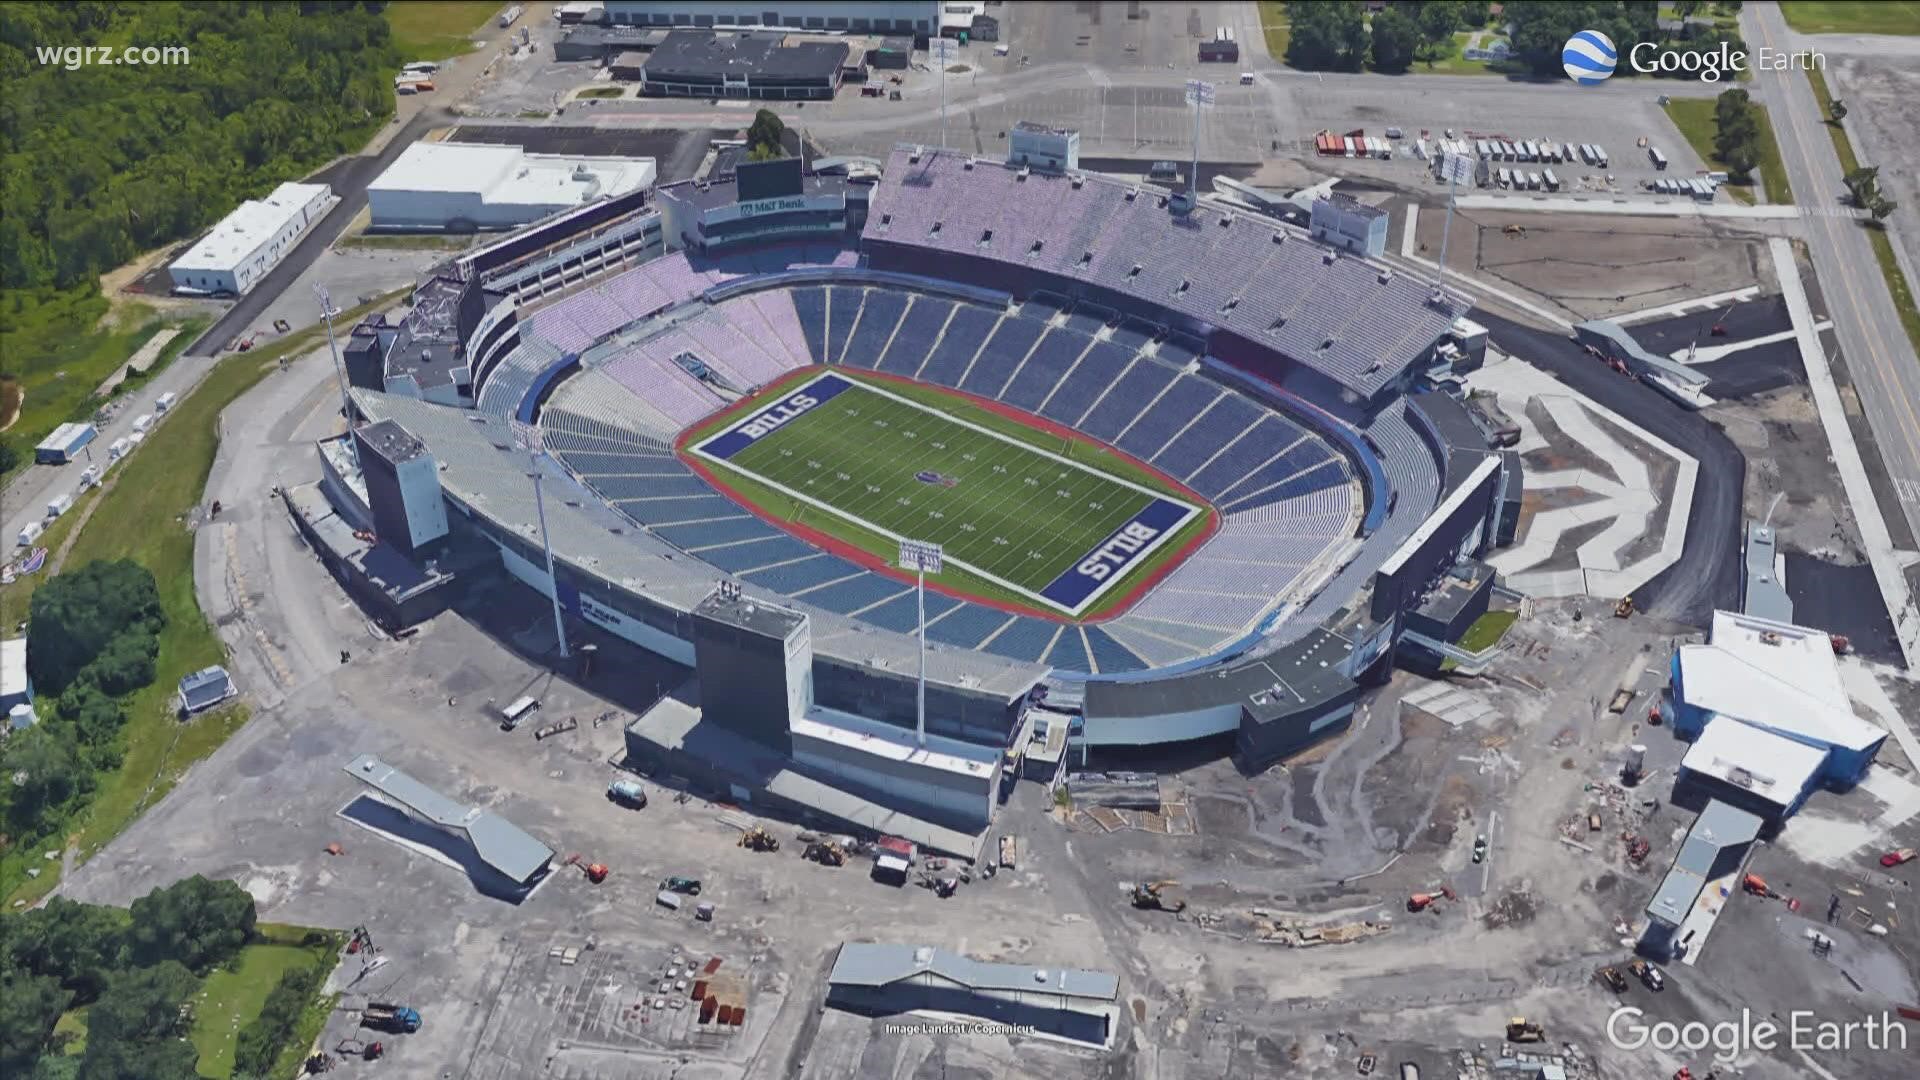 Bills stadium site plans and public opinion